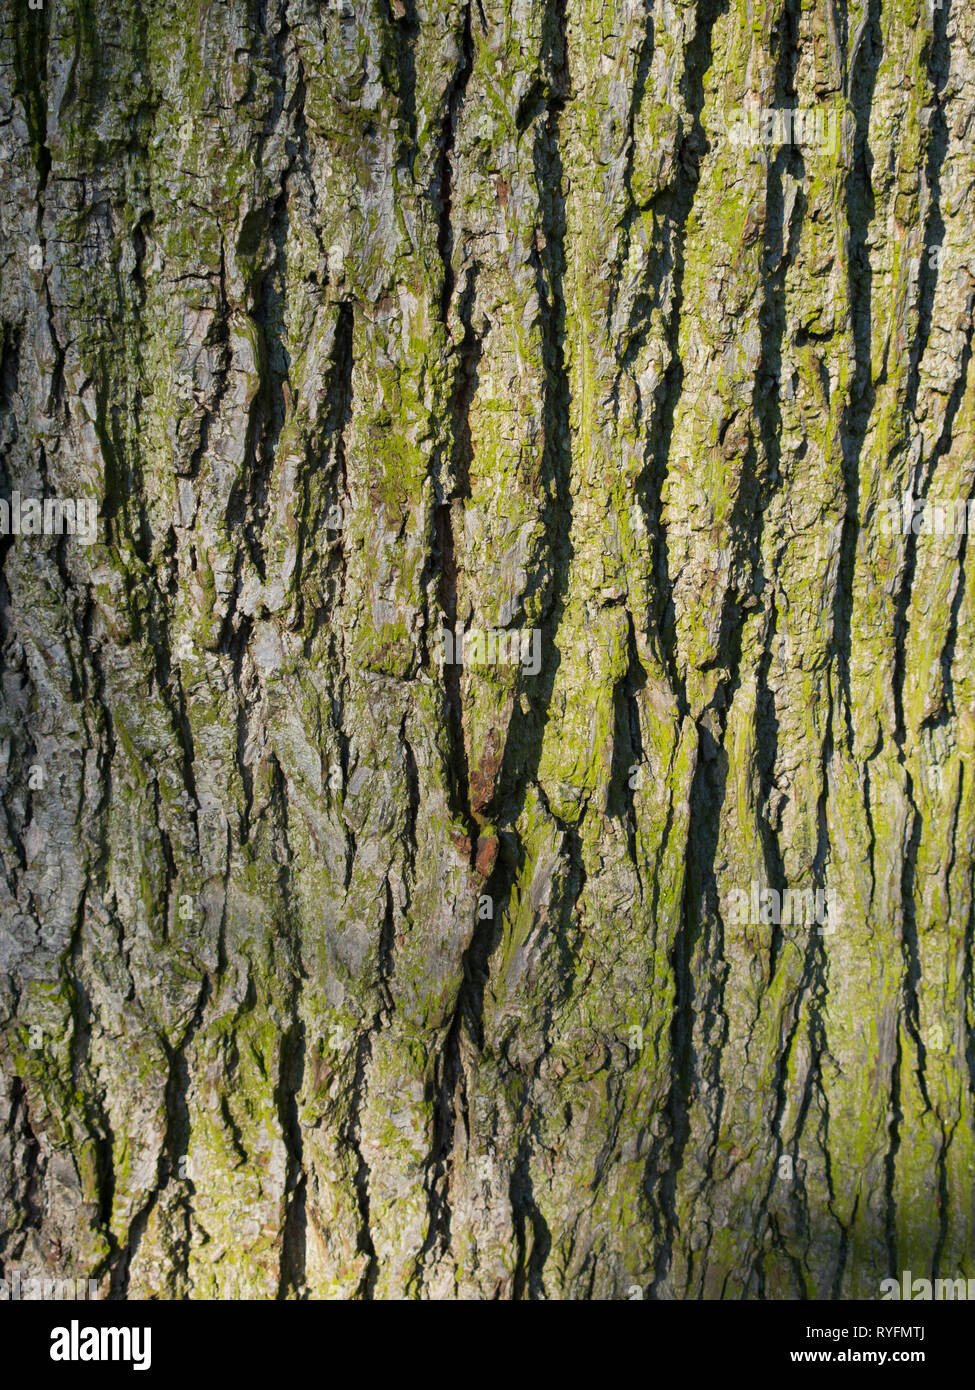 Lime tree bark trunk Stock Photo